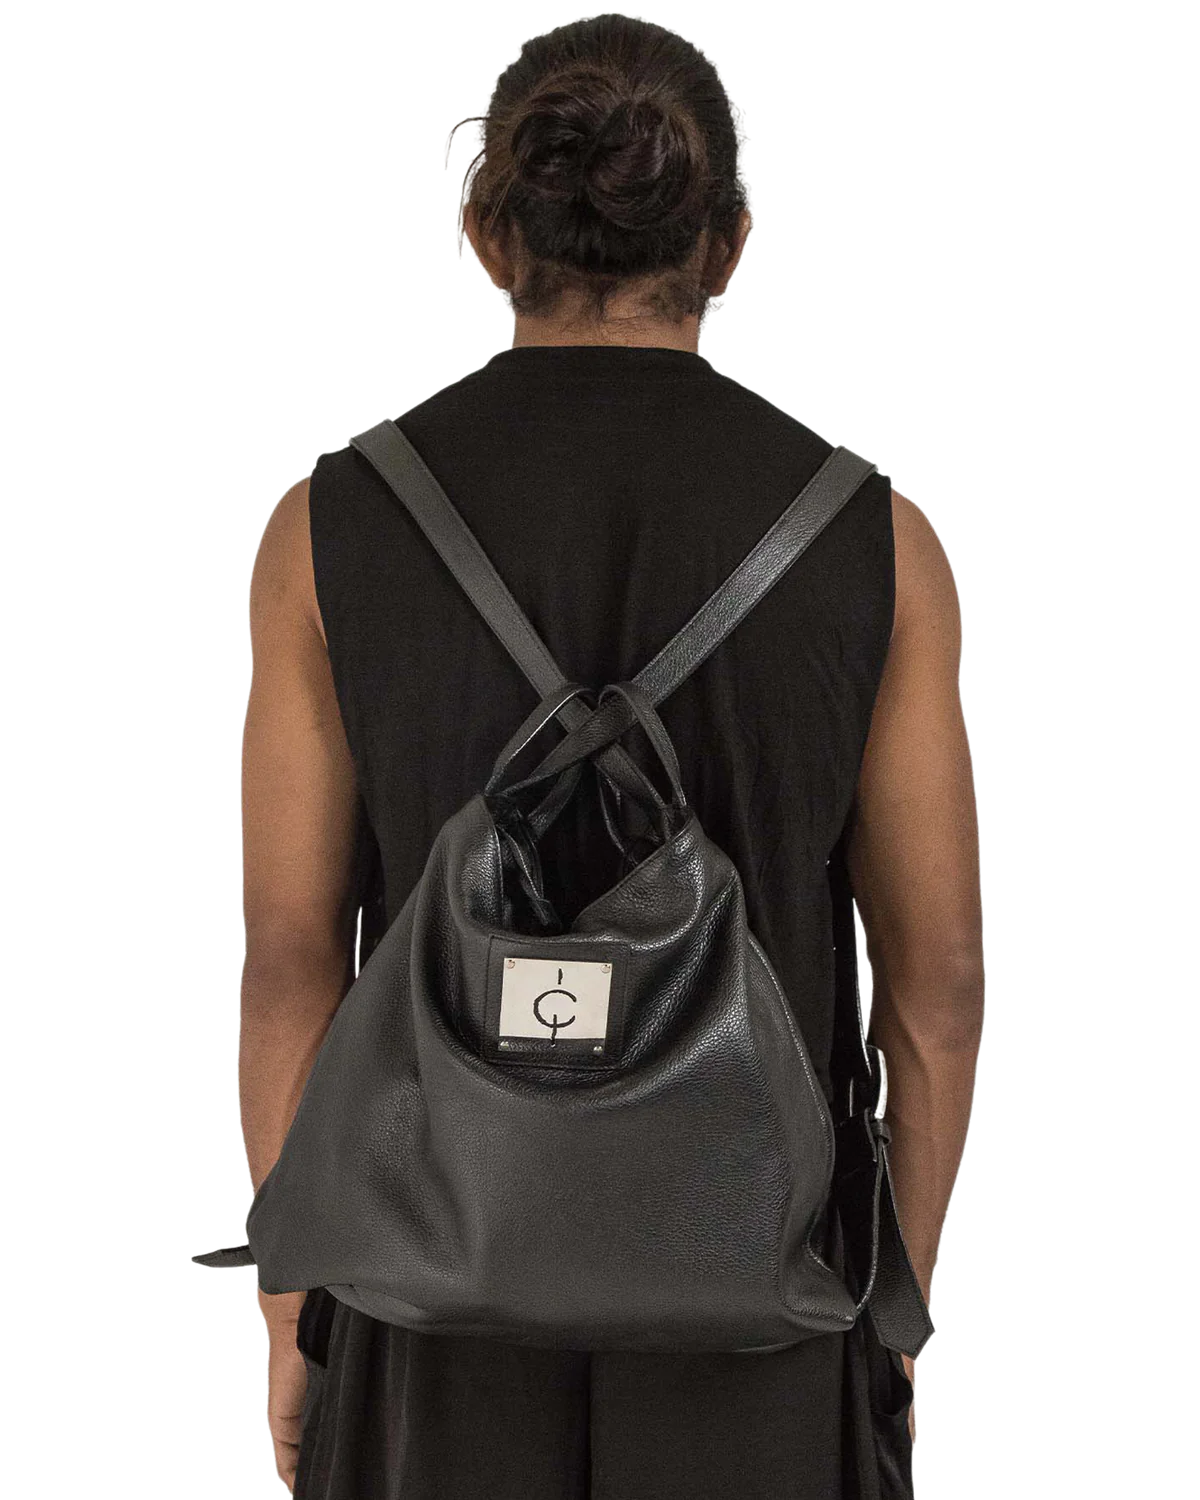 Wolfin back-pack bag